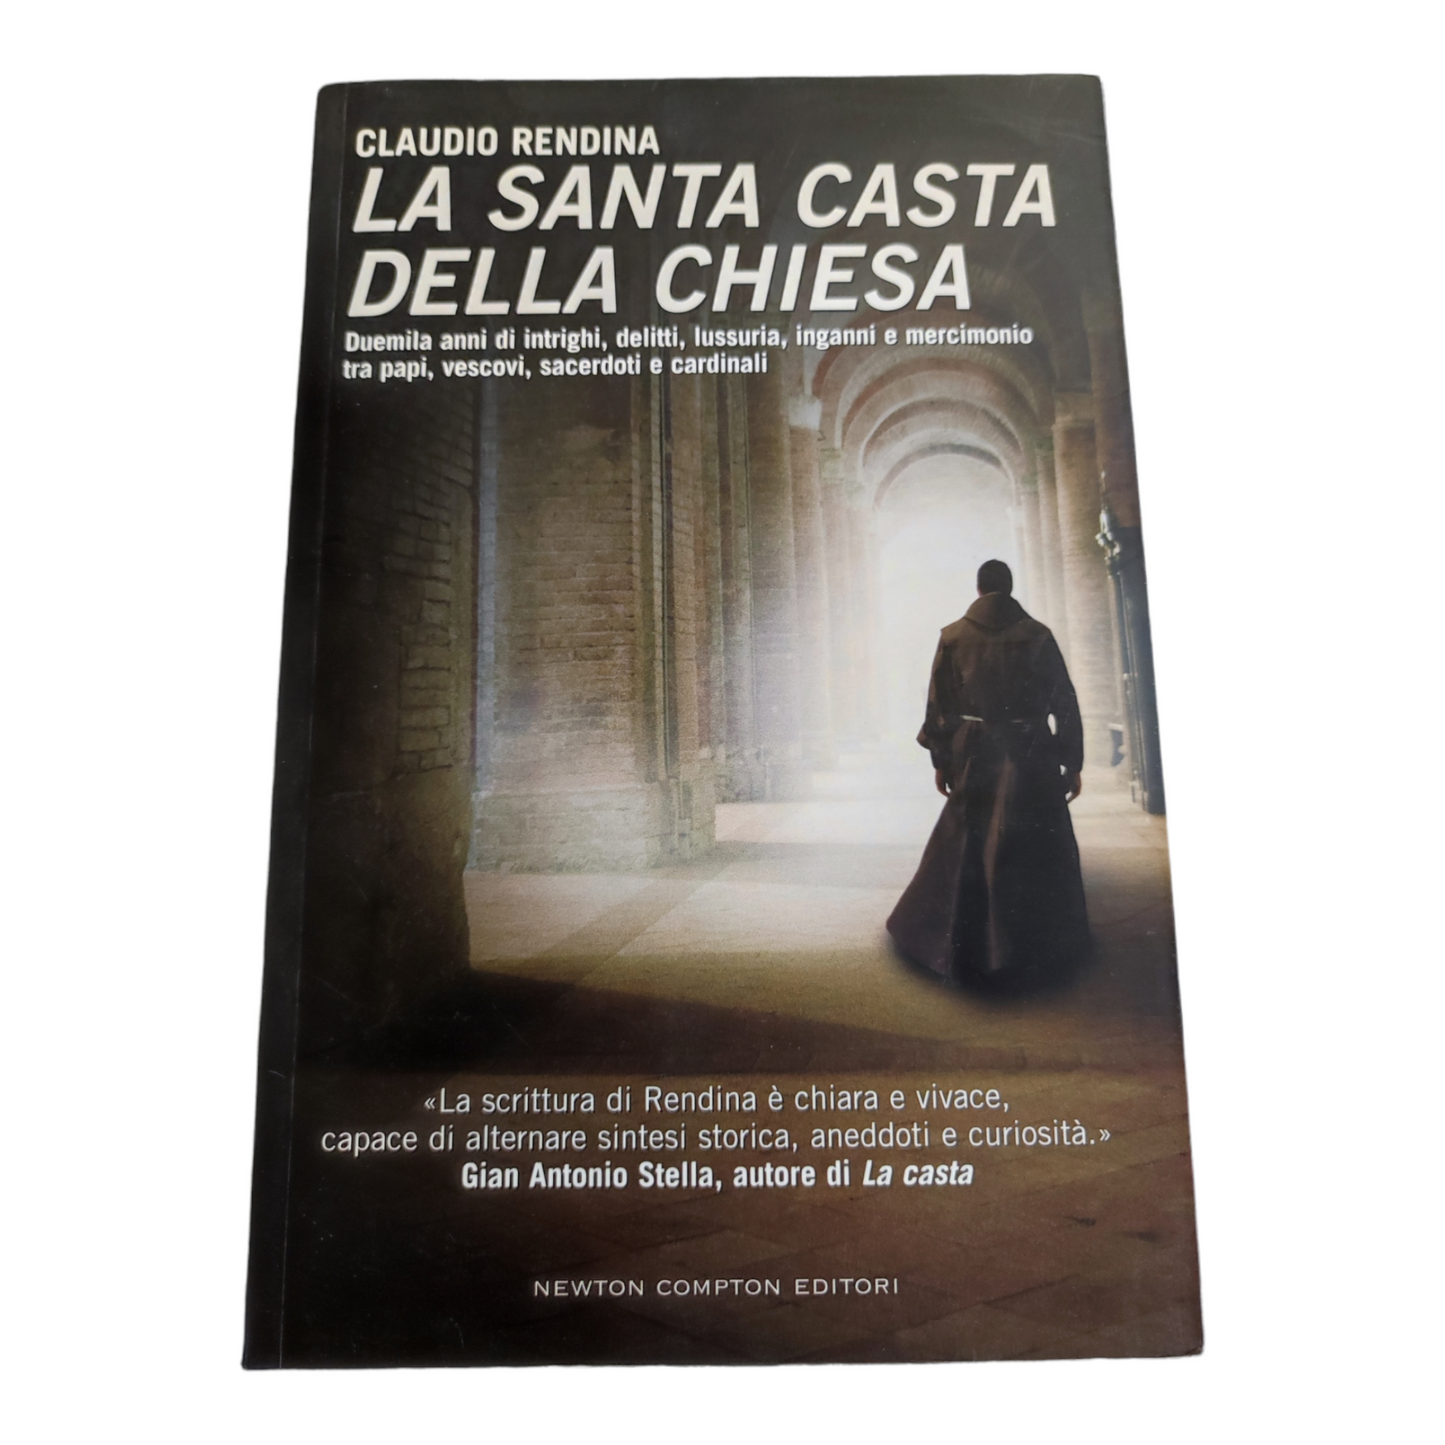 La santa casta della chiesa - Claudio Rendina